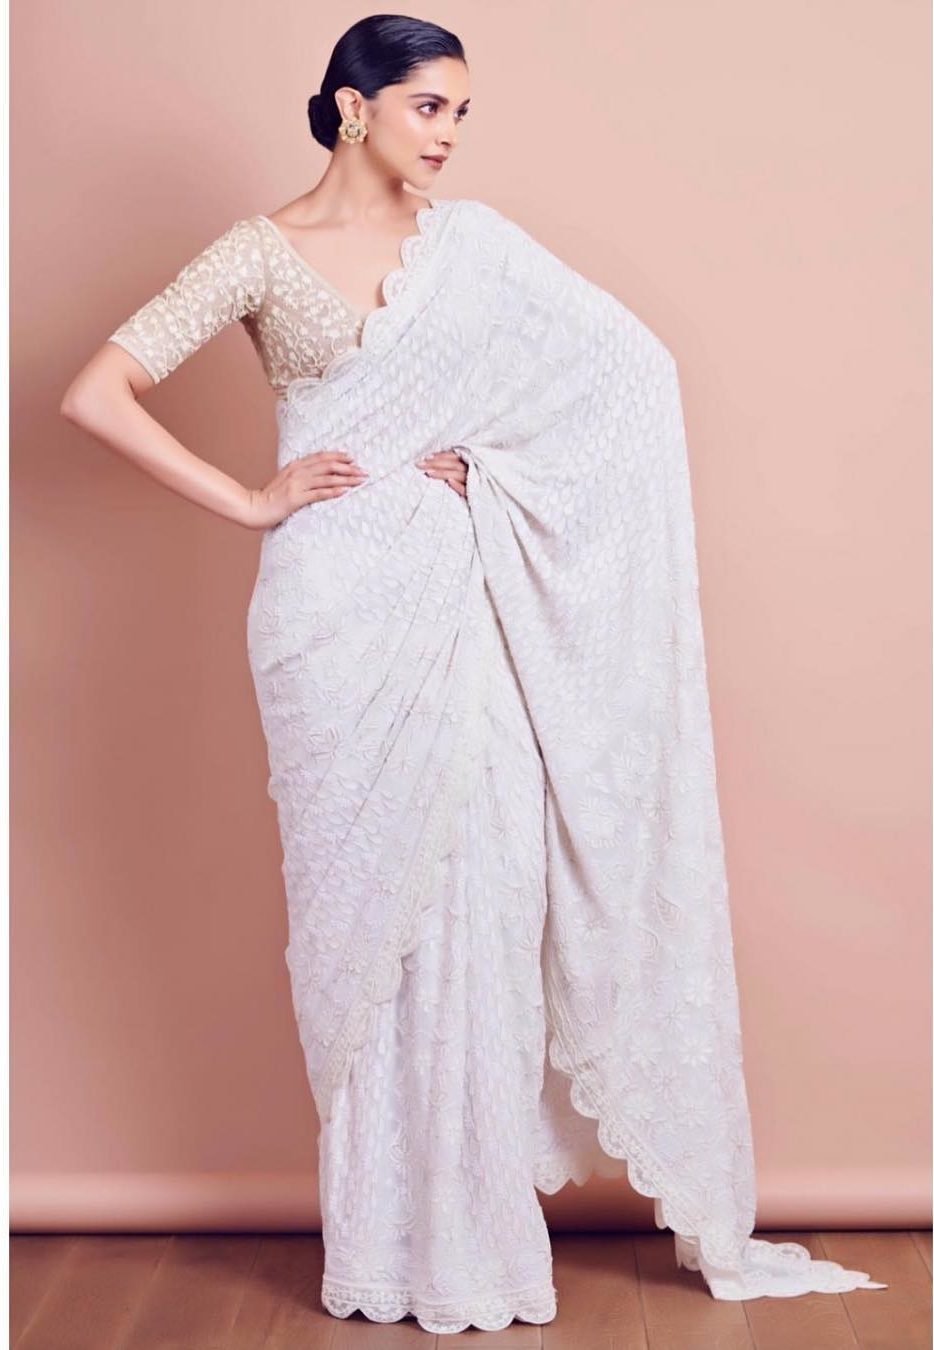 Chikan Kari Saree for Bride's Sister Indian Bridesmaid Dresses | Celebrity Wedding Dress Inspirations